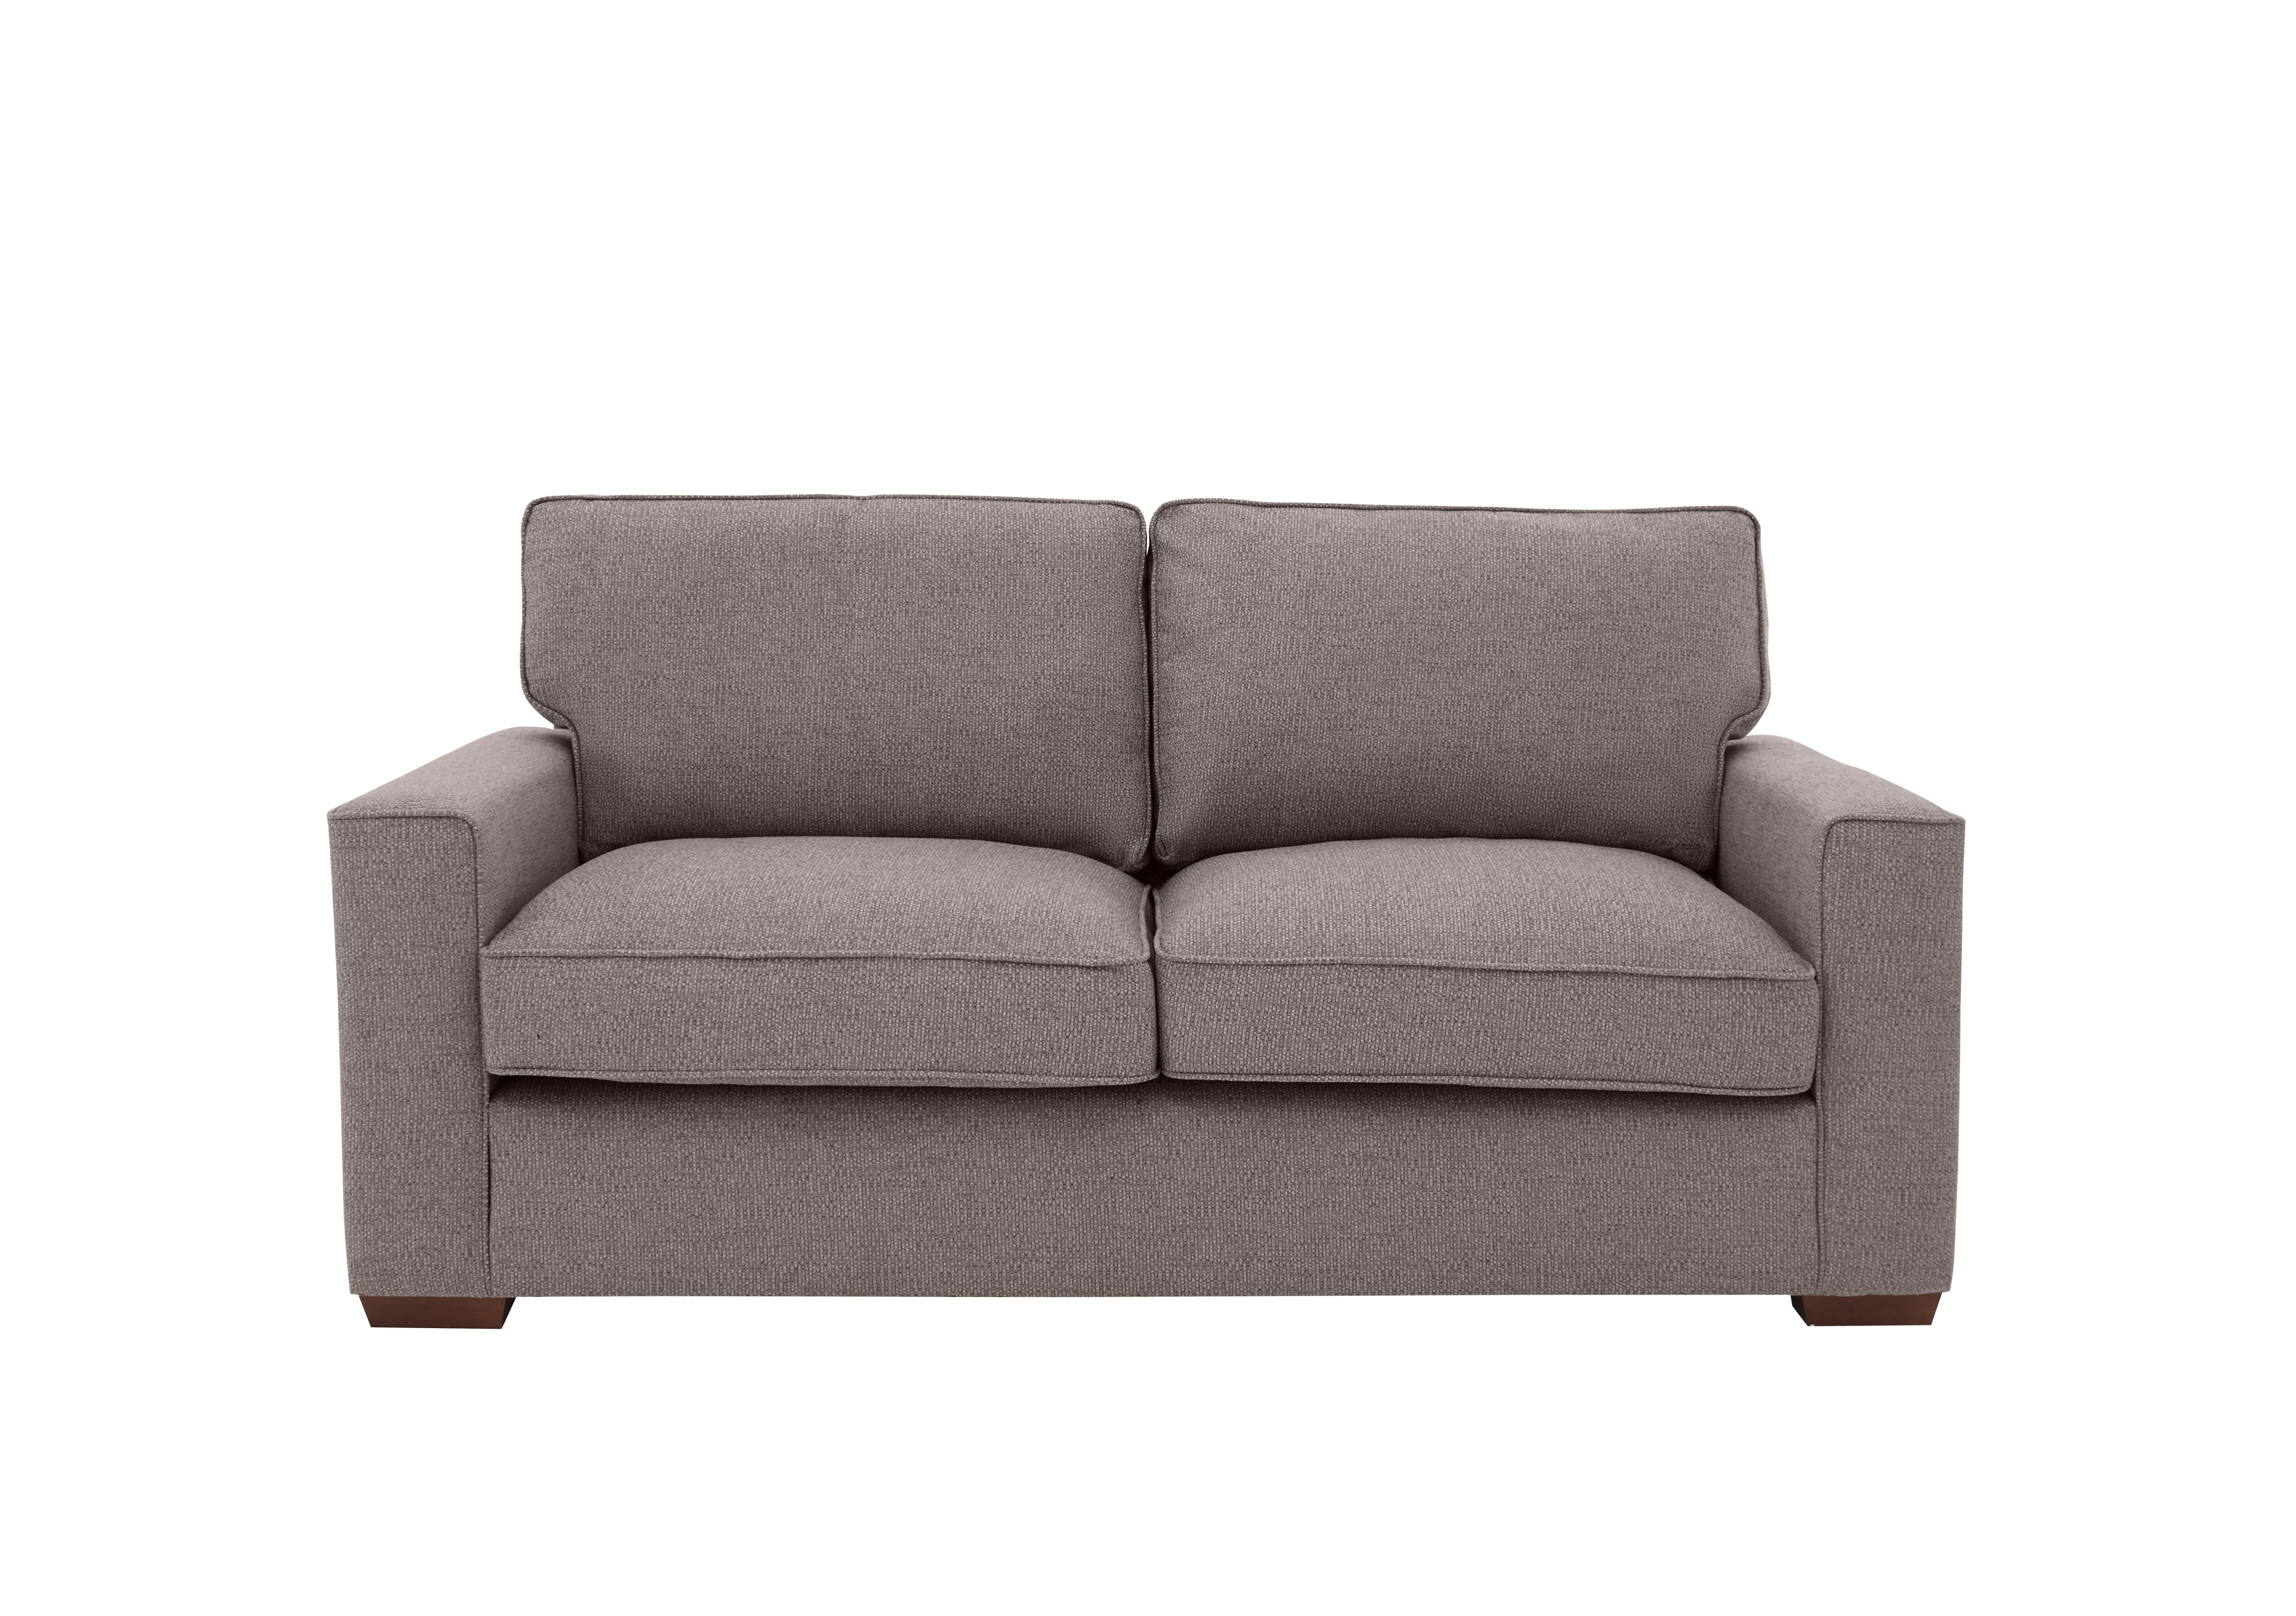 Cory 3 Seater Fabric Classic Back Sofa in Dallas Taupe on Furniture Village